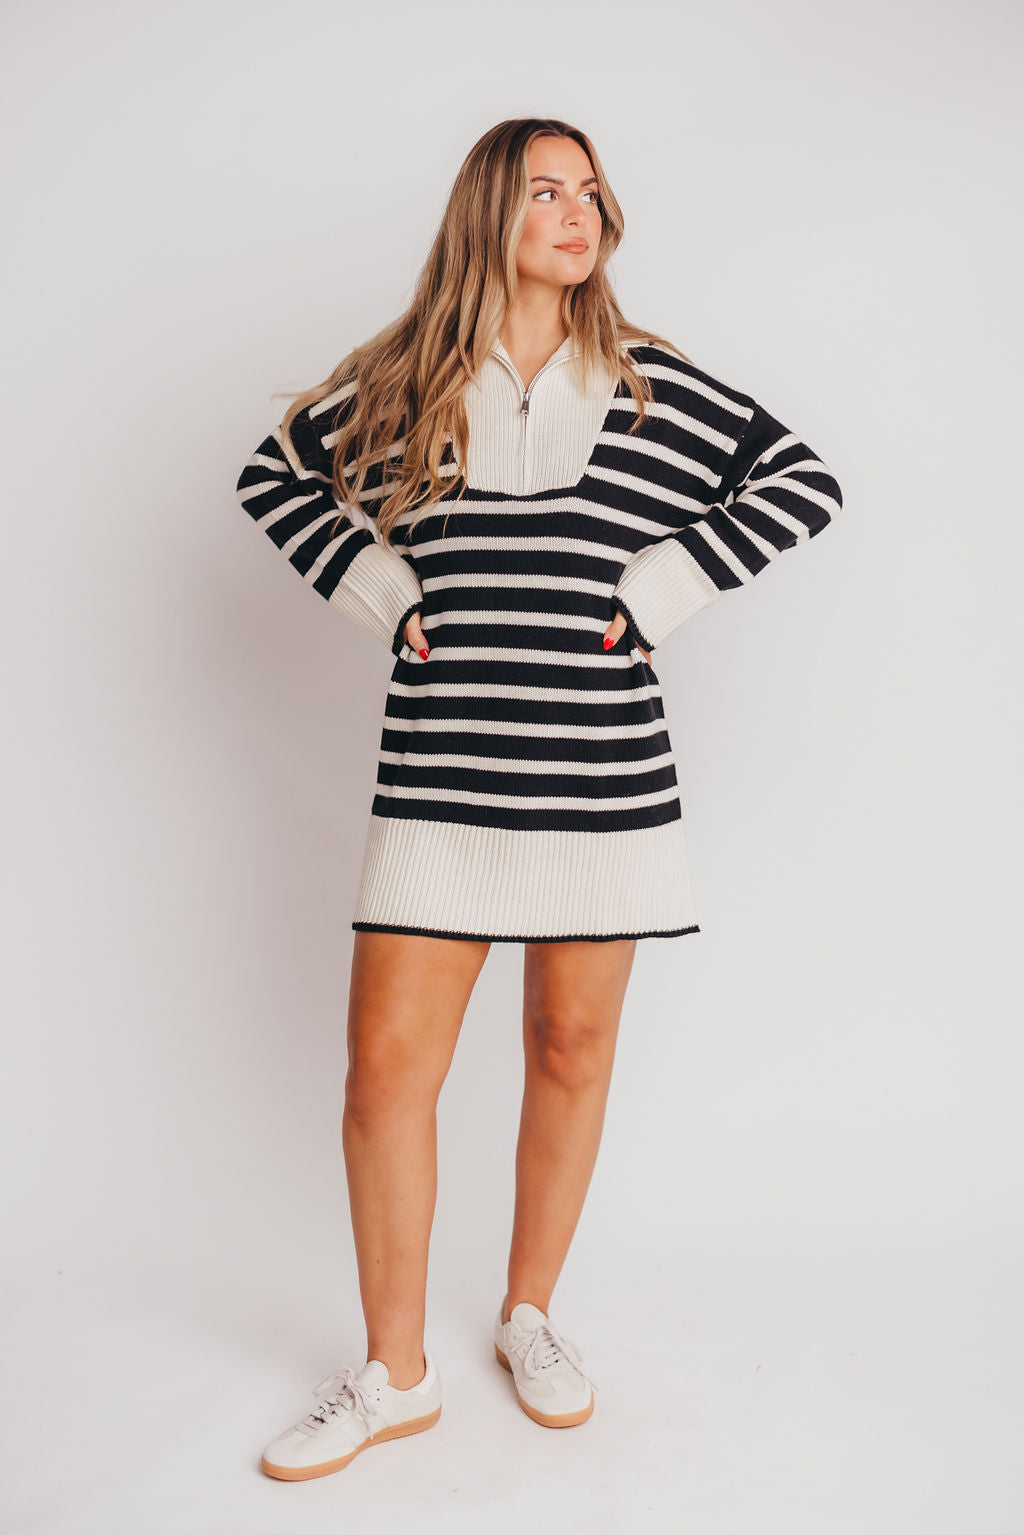 Beatrice Collared Sweater Dress in Black/Cream Stripe